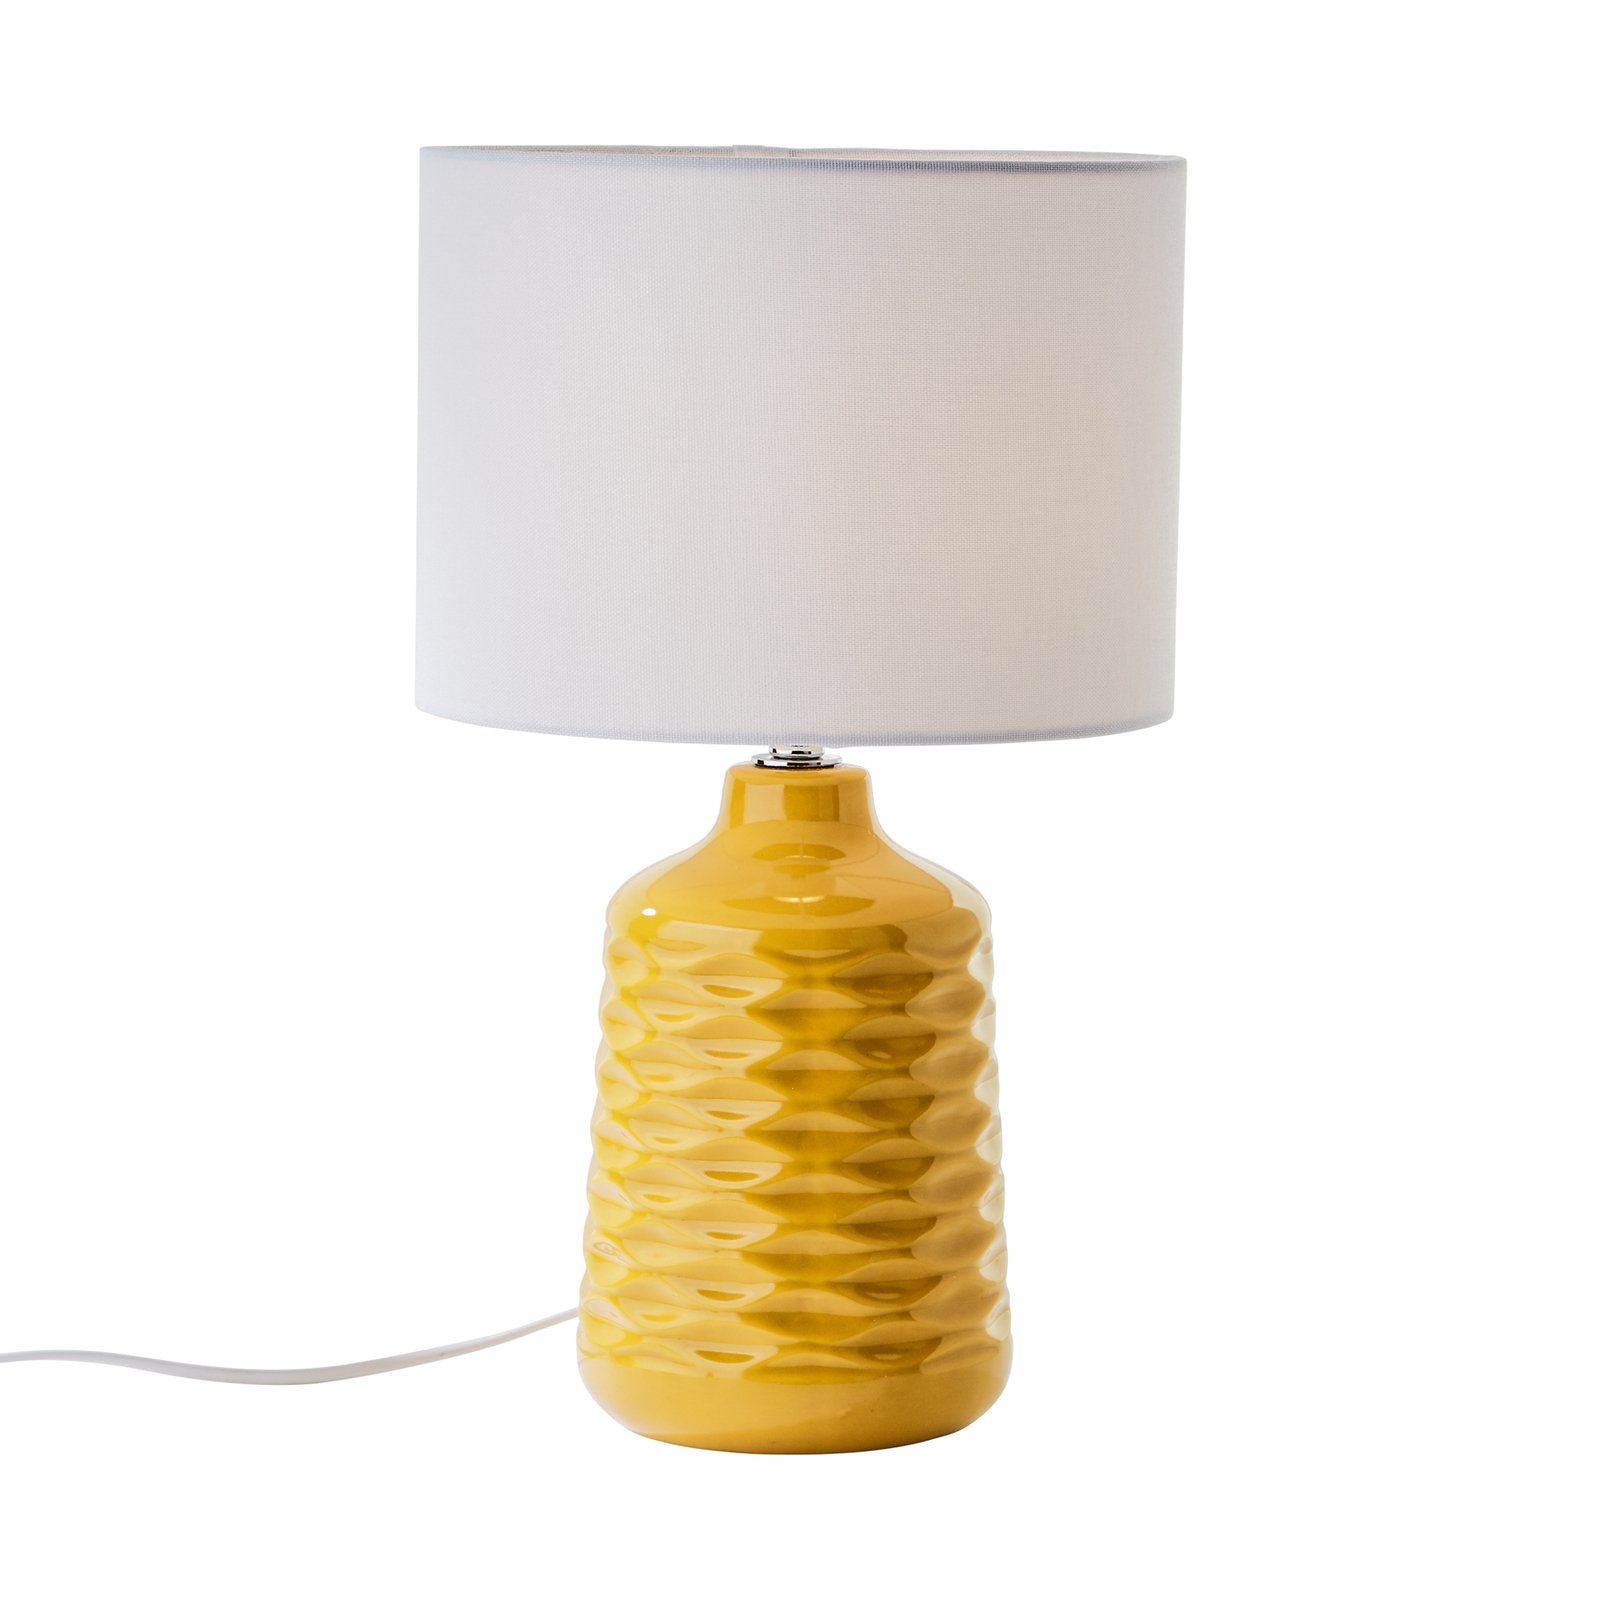 Ilysa bordlampe, hvid stofskærm, gul keramisk fod